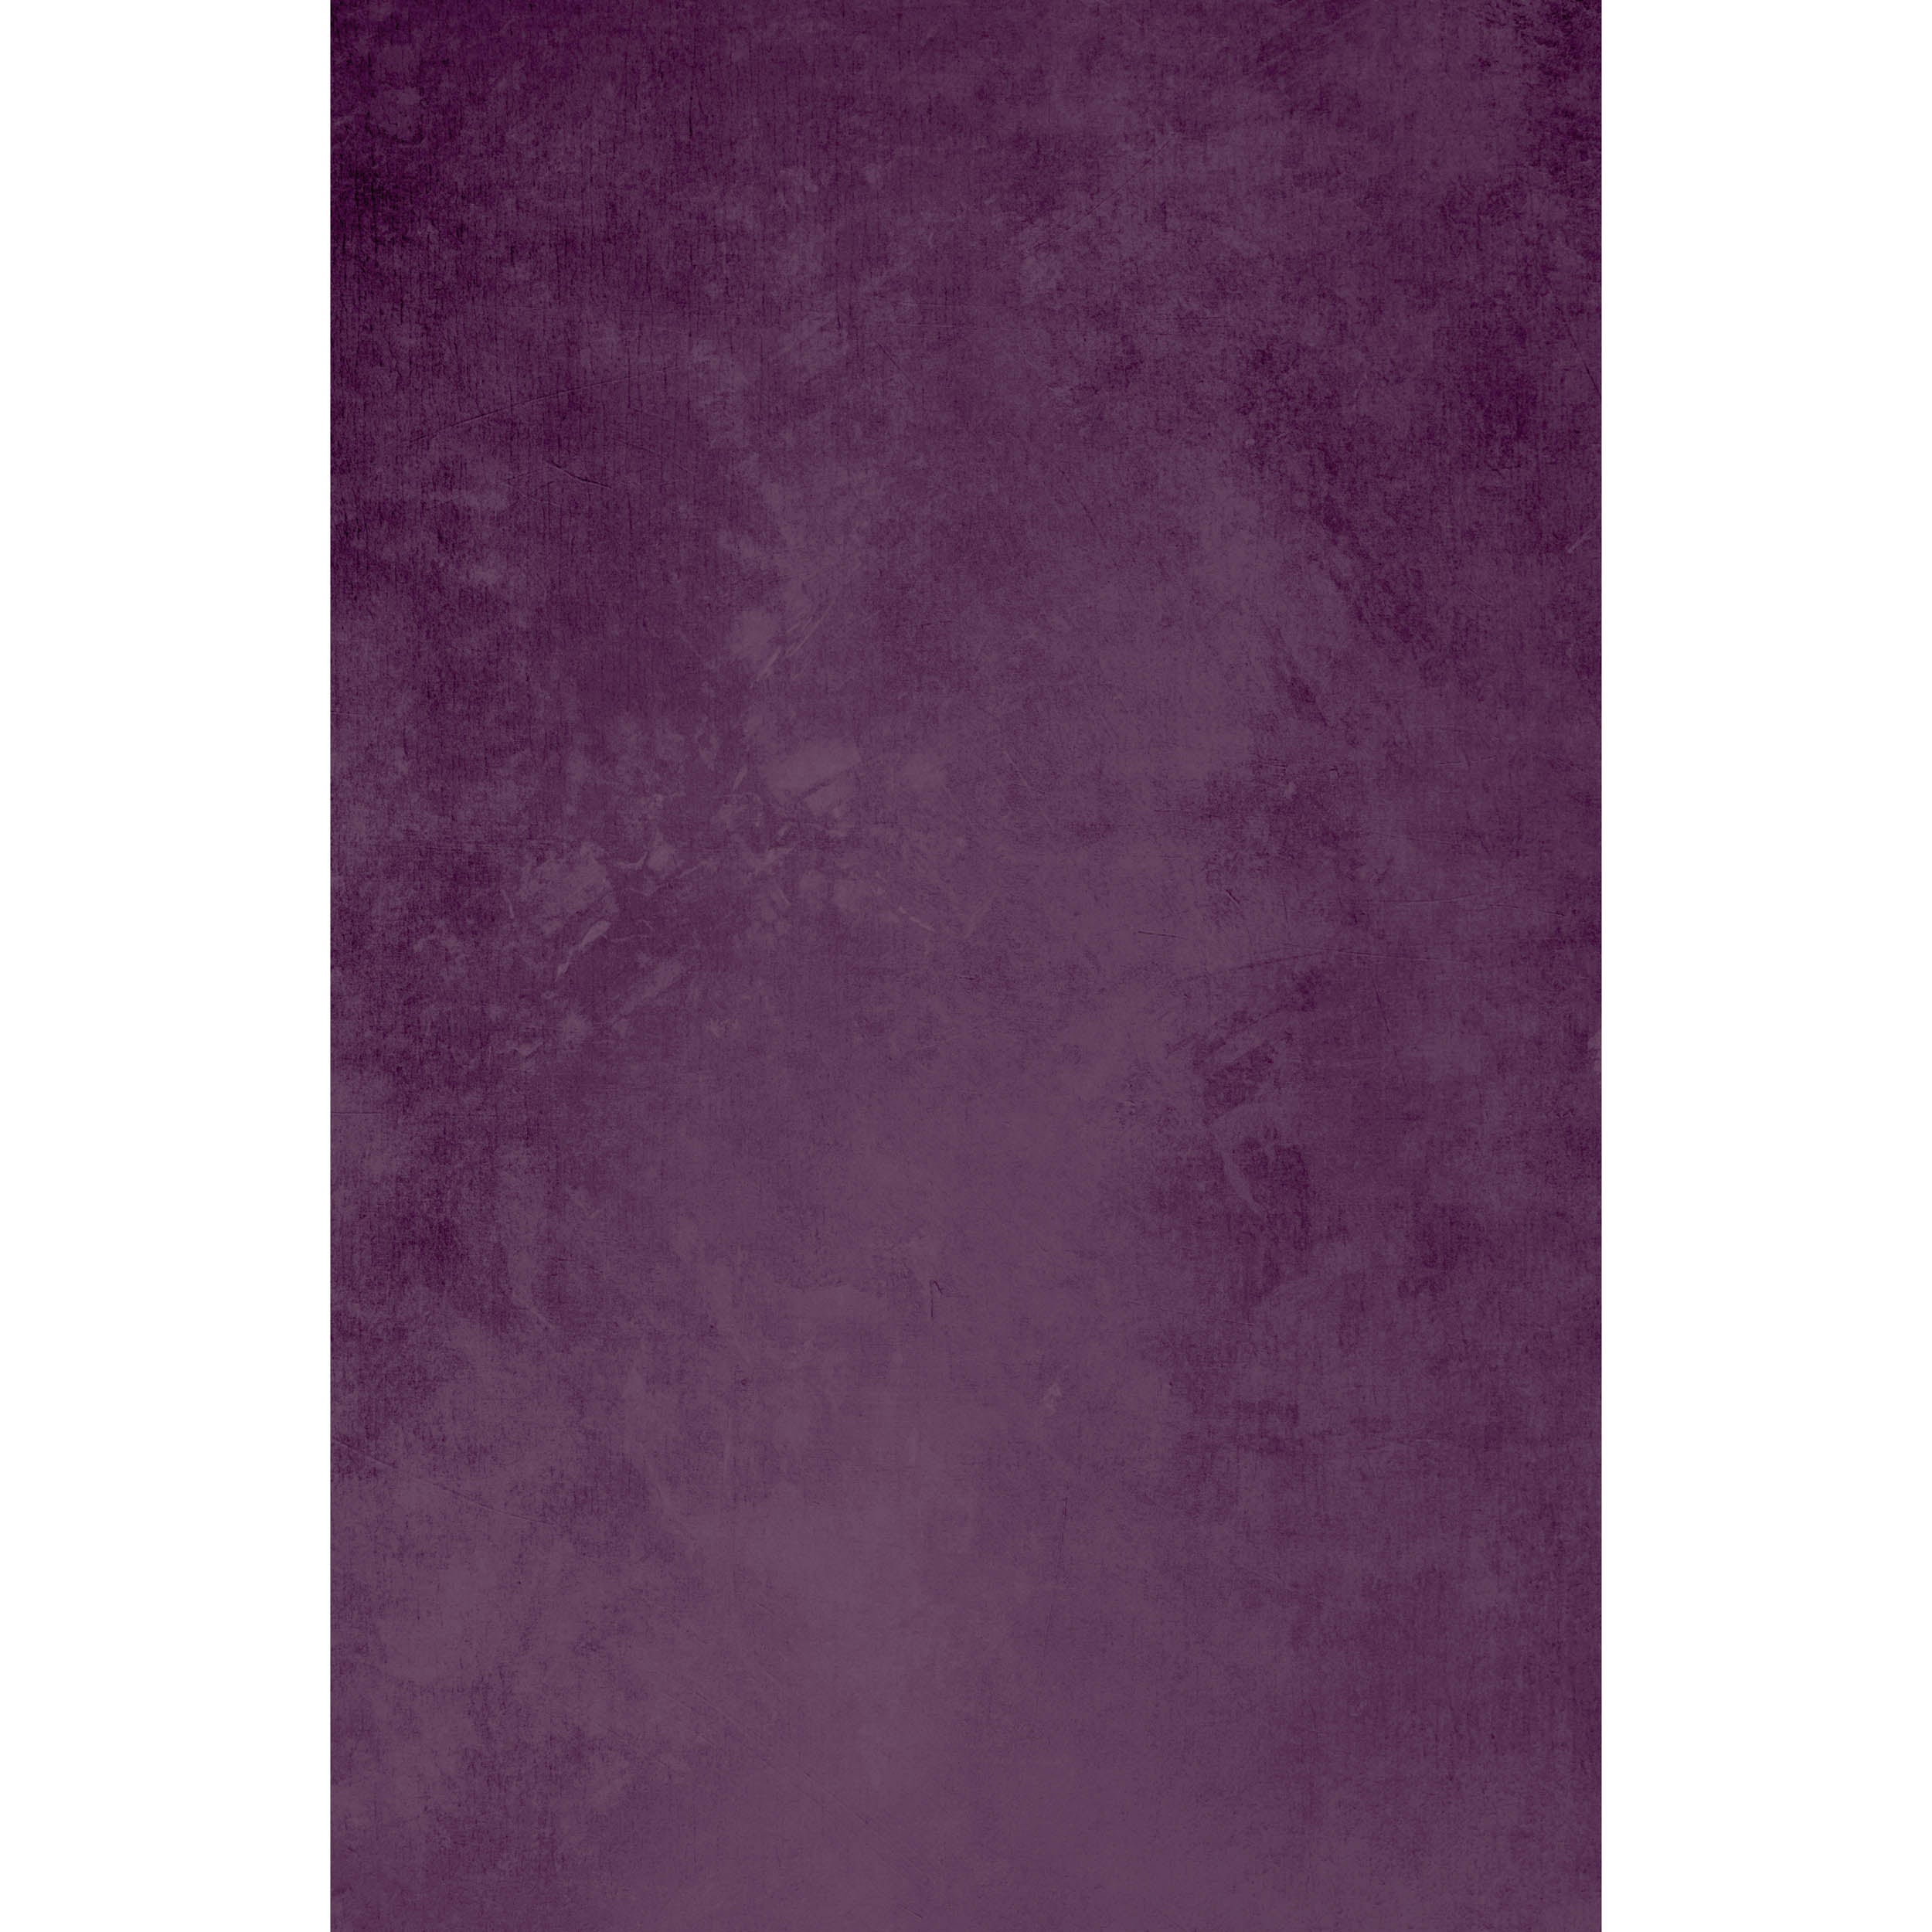 EASIFRAME CURVED C31-Rose Violet Fabric Skin Pattern